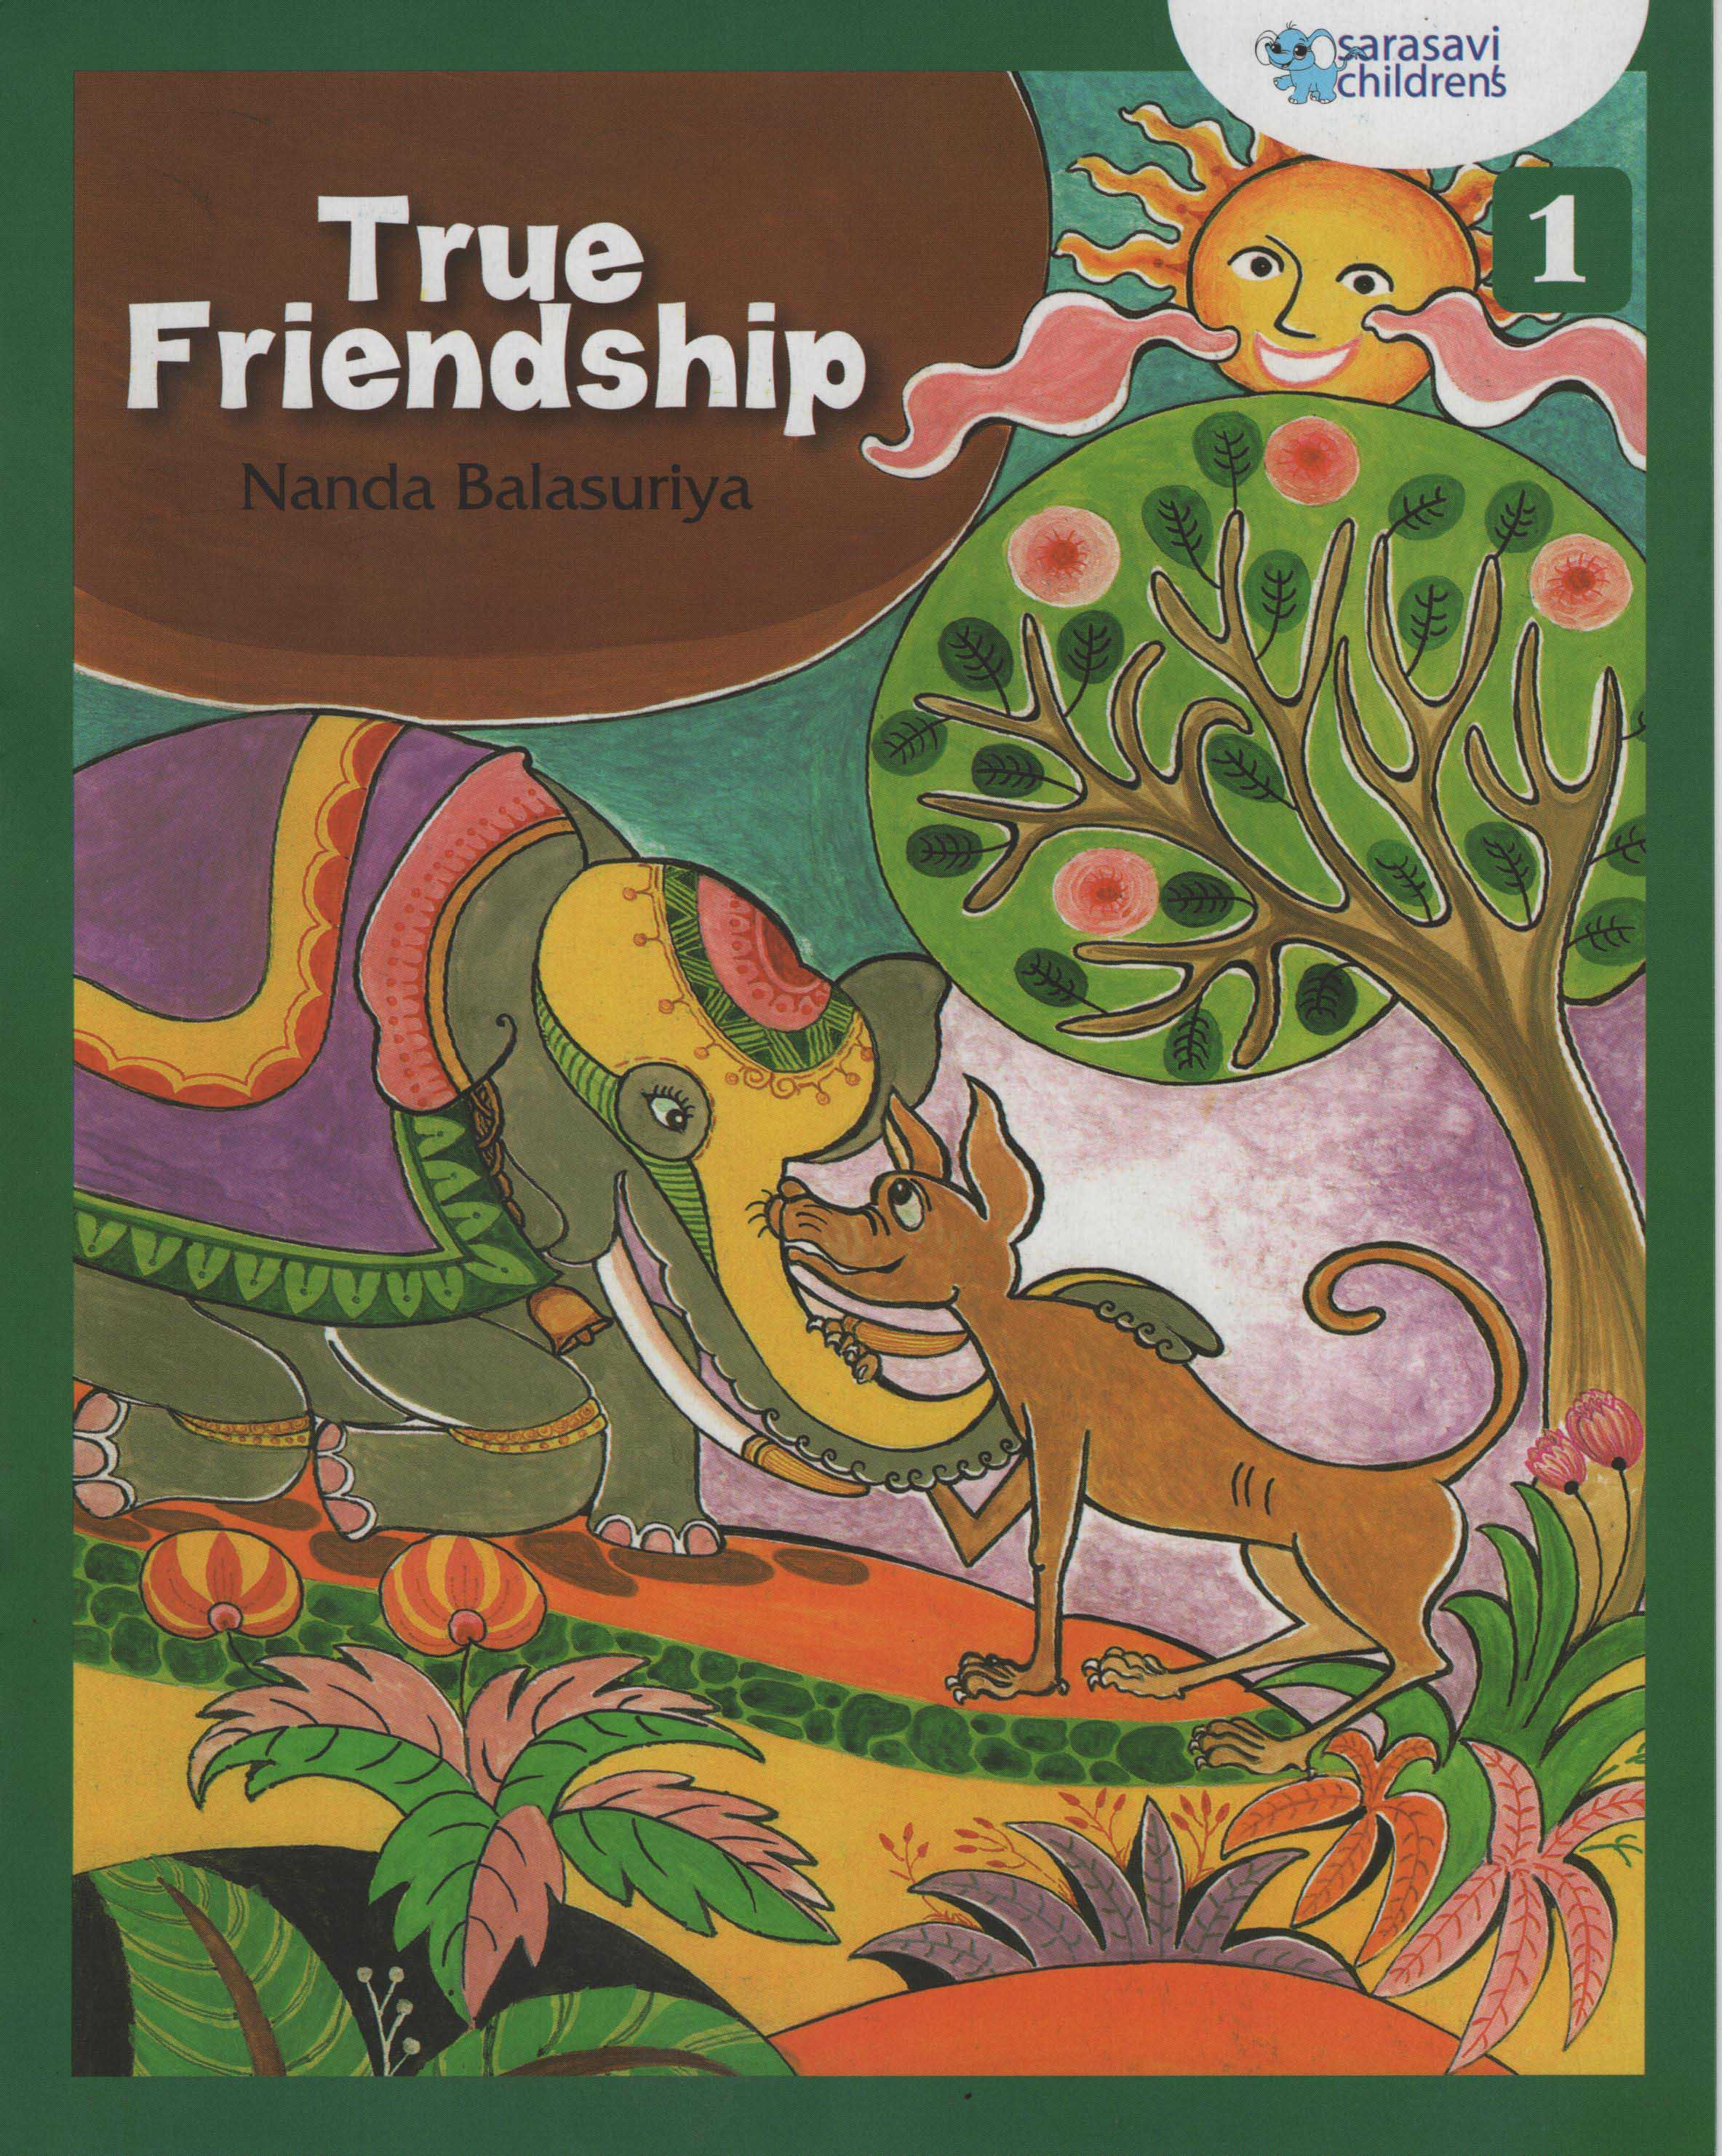 Sarasavi Childrens 01 True Friendship